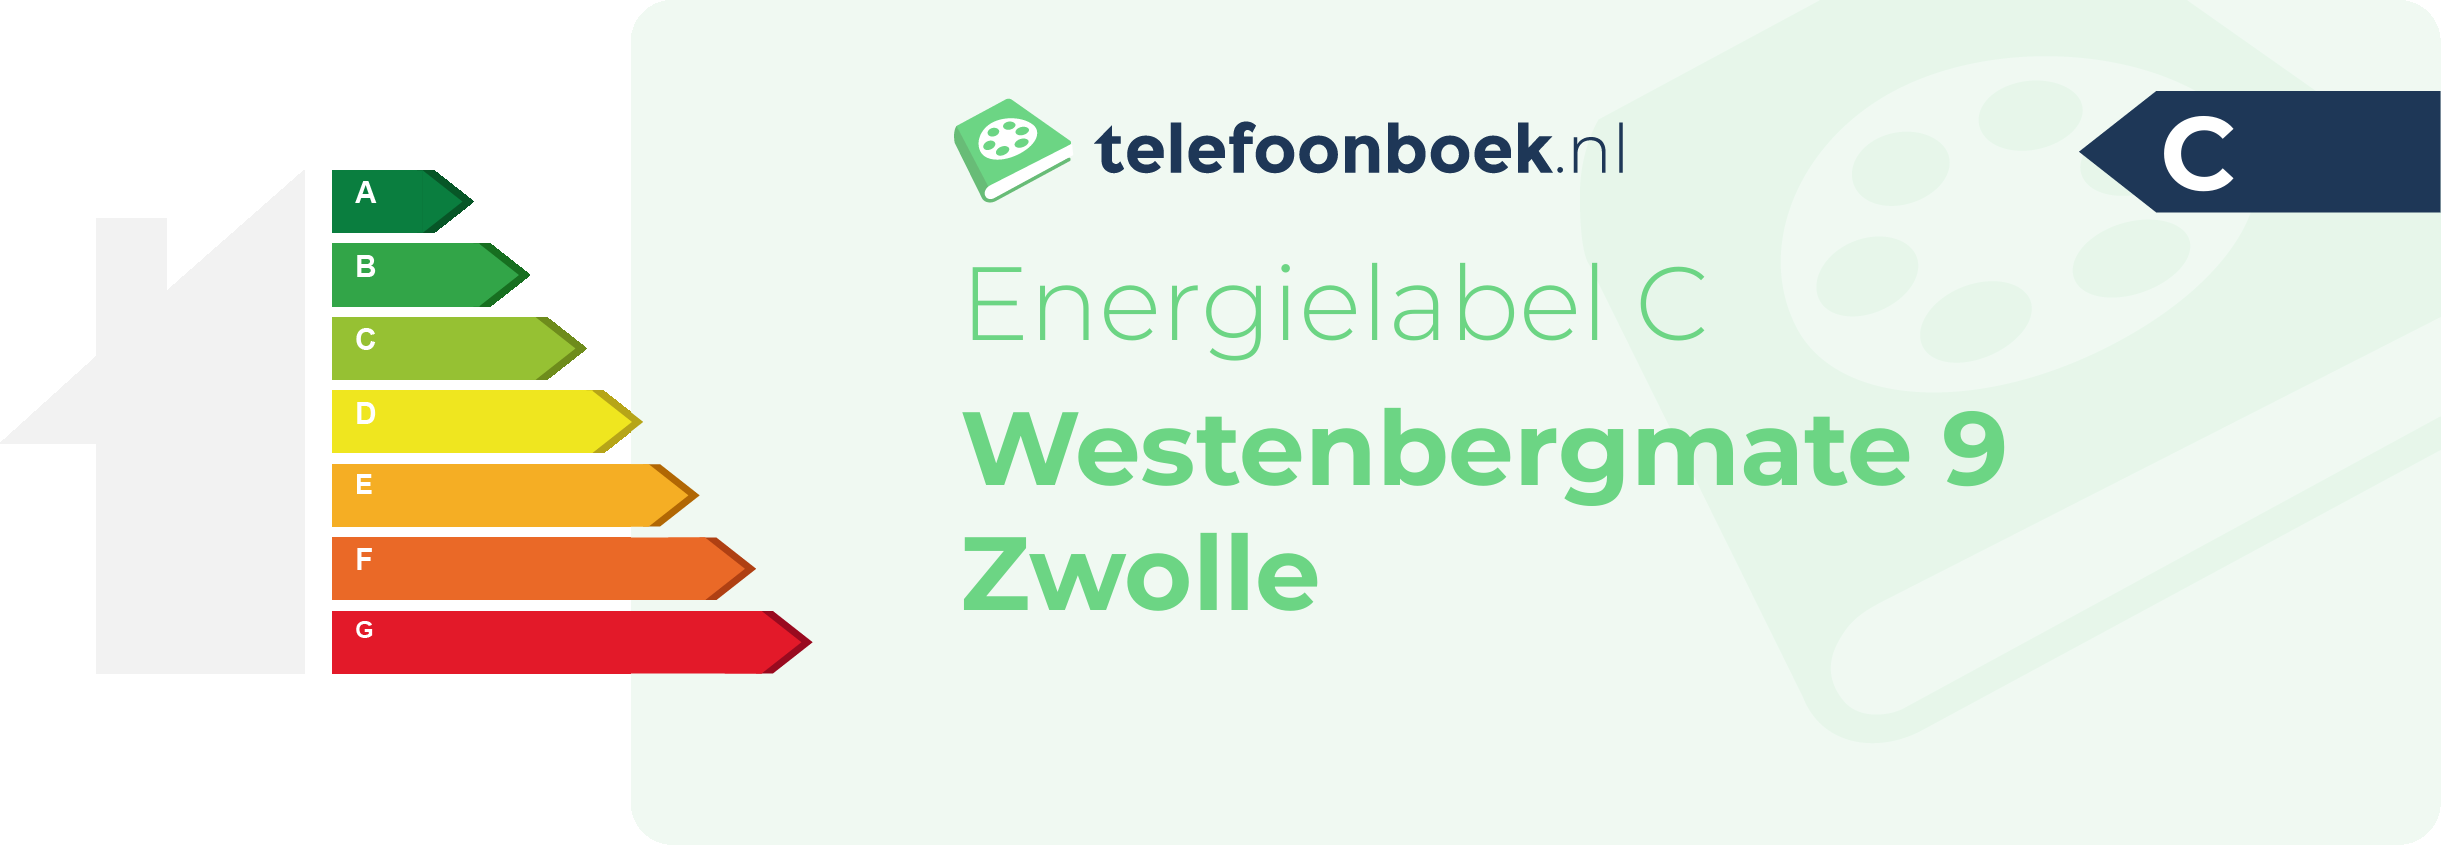 Energielabel Westenbergmate 9 Zwolle